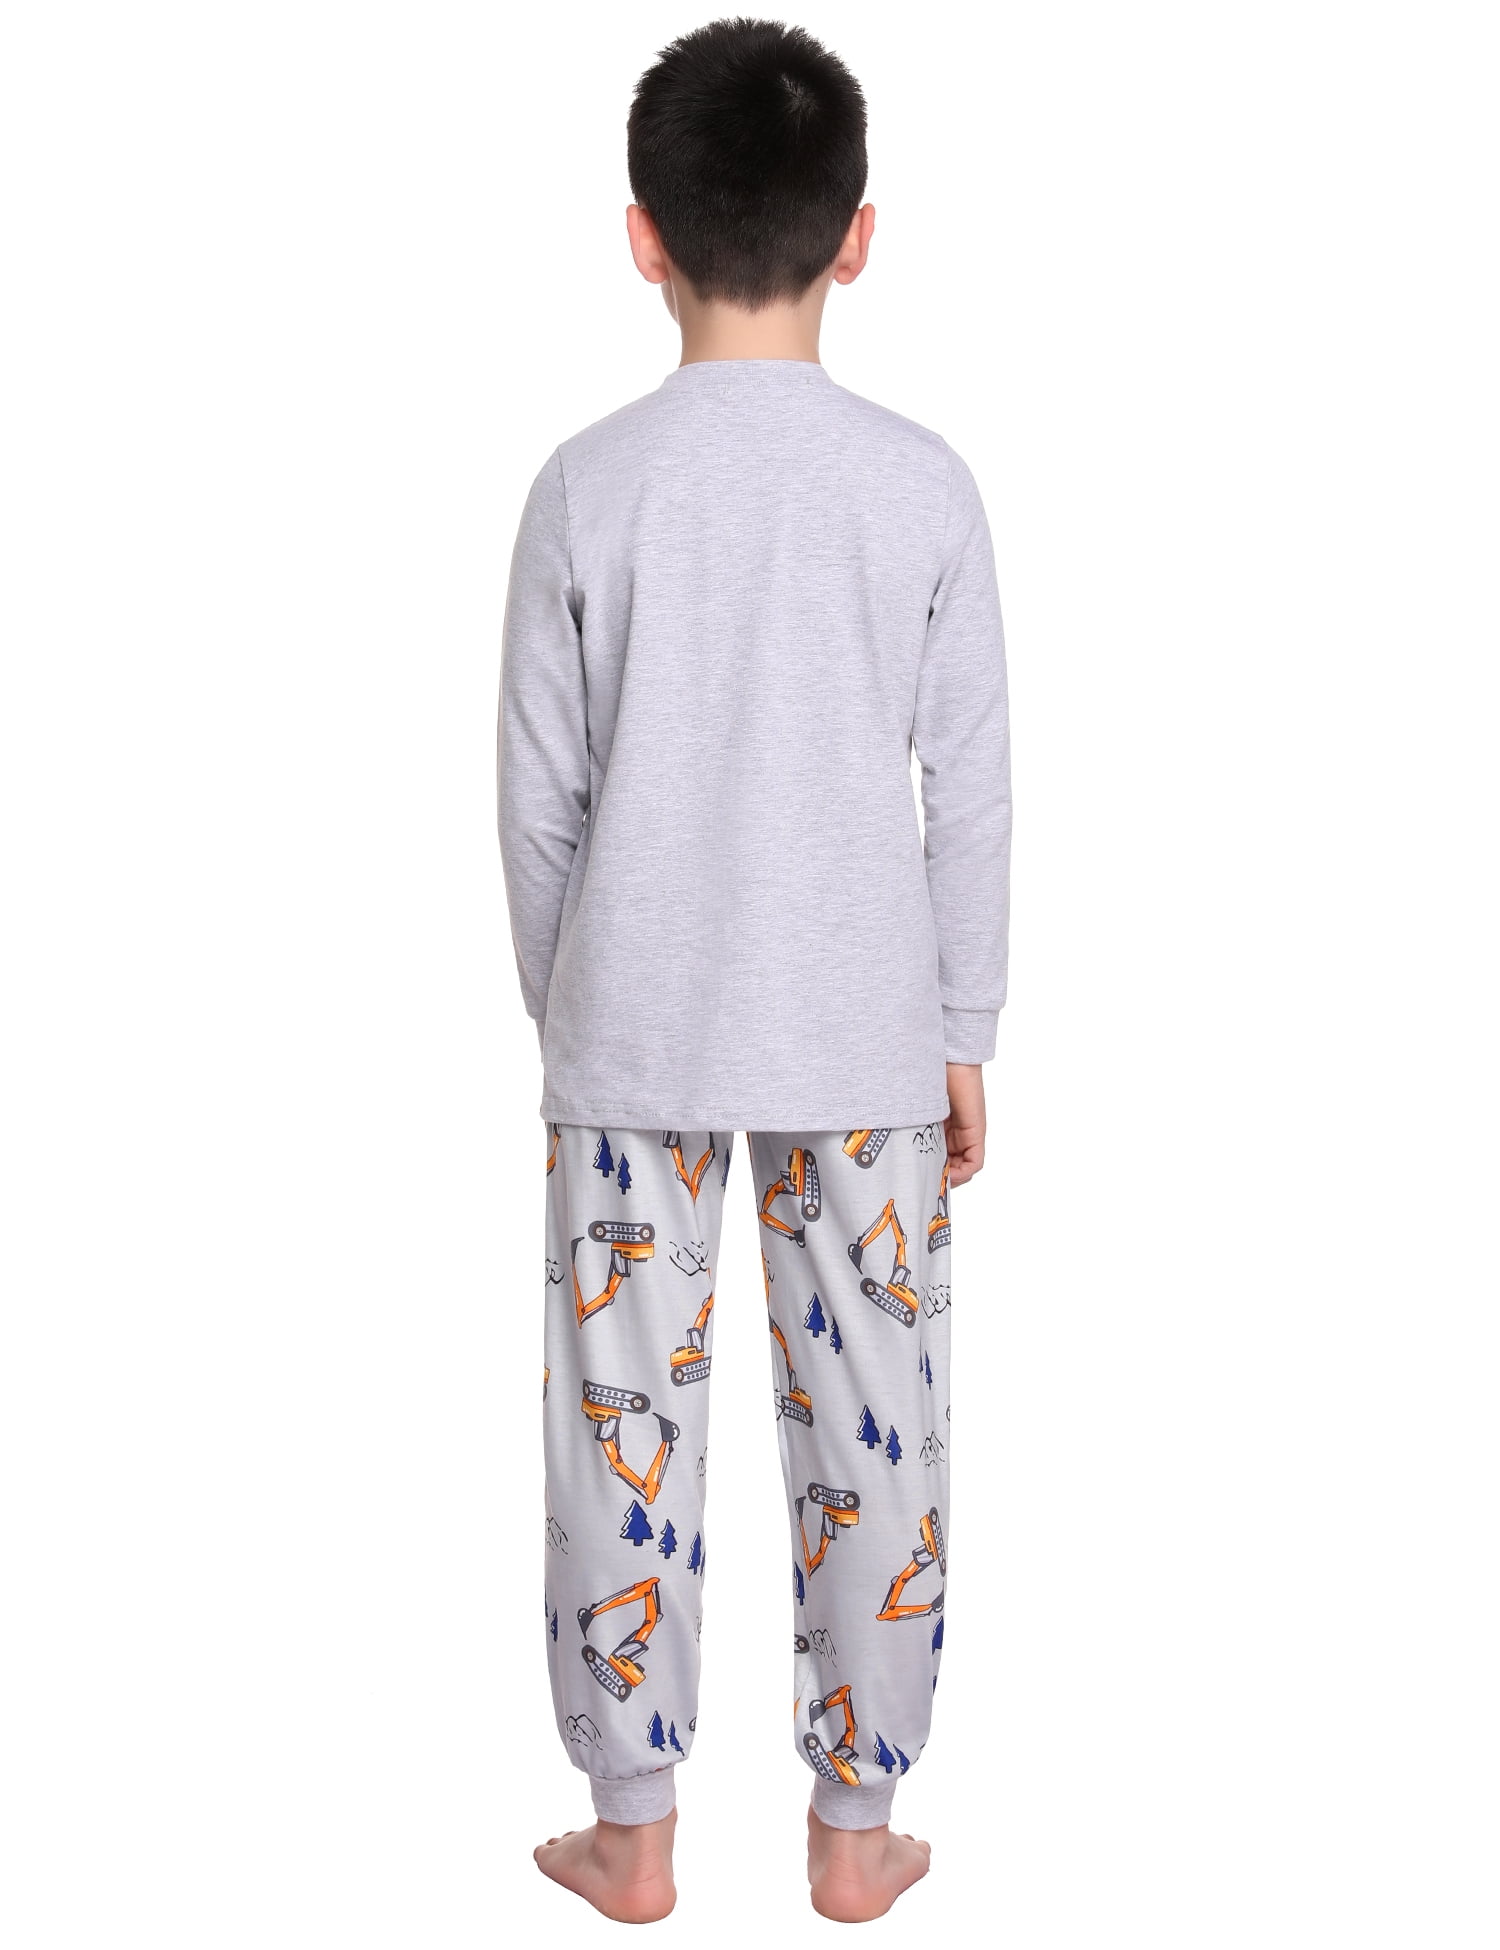 Uniexcosm Kids Long Sleeve Velvet Pajamas Sets for Girls Boys Velour PJs  Sleepwear S-XXL